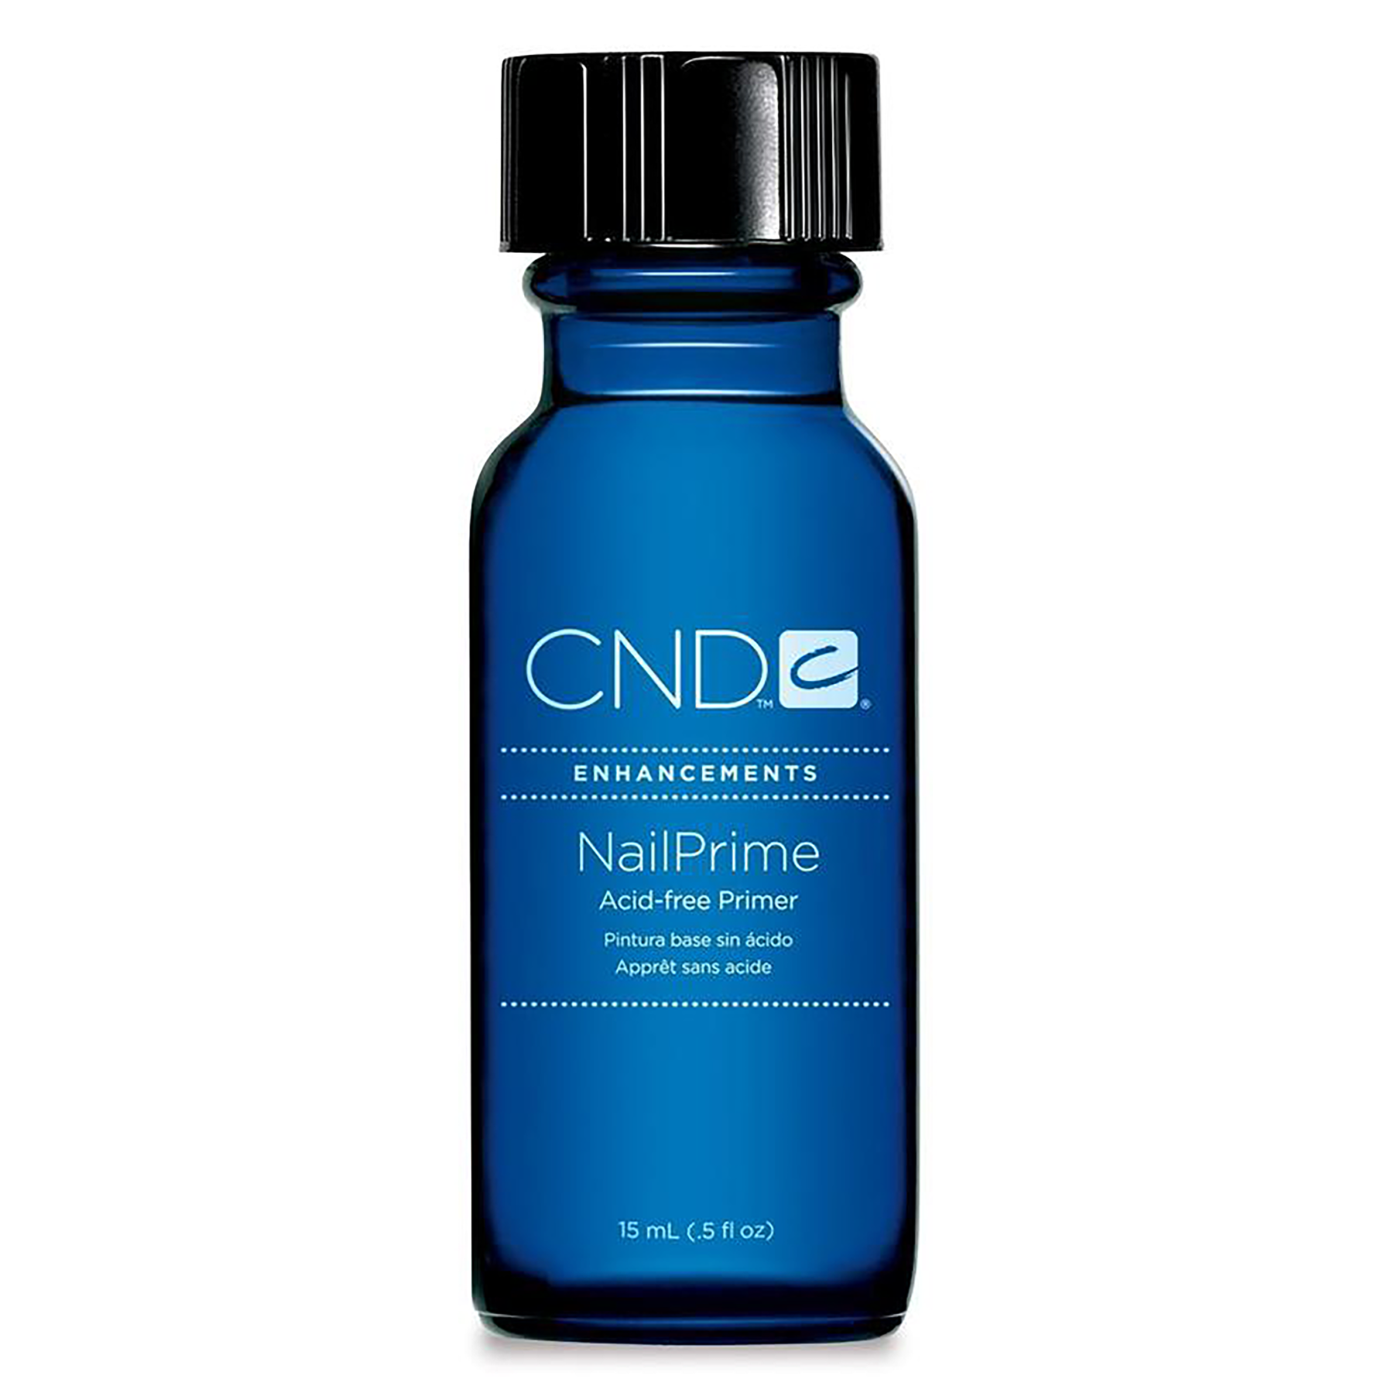 NailPrime Acid-Free Primer